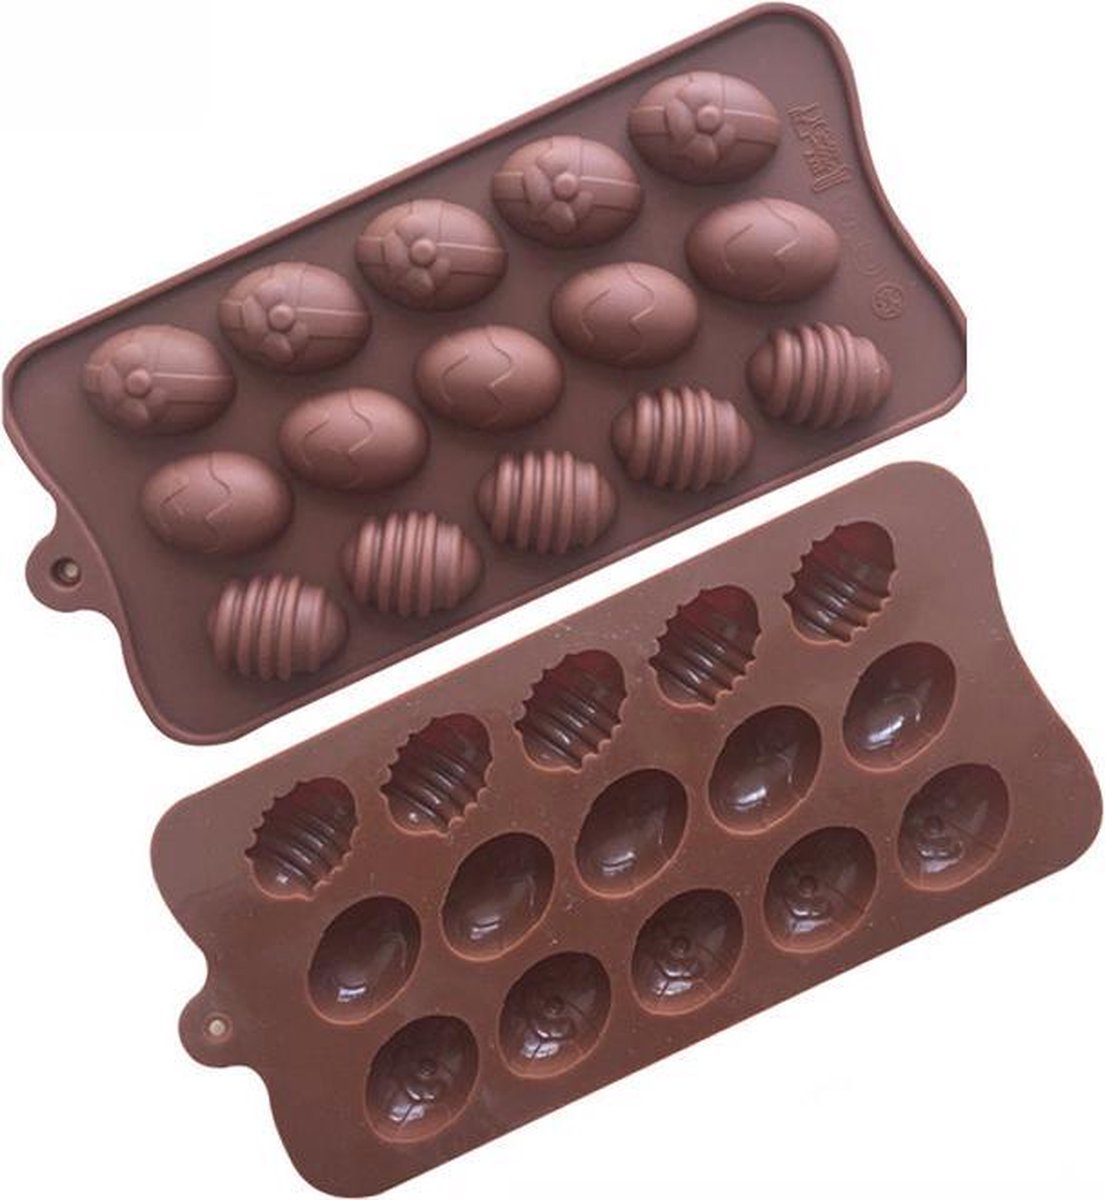 ProductGoods - Siliconen bakvorm - Bonbonvorm - Chocoladevorm - Paaseitjes - 15 stuks - Pasen - Bakvormen